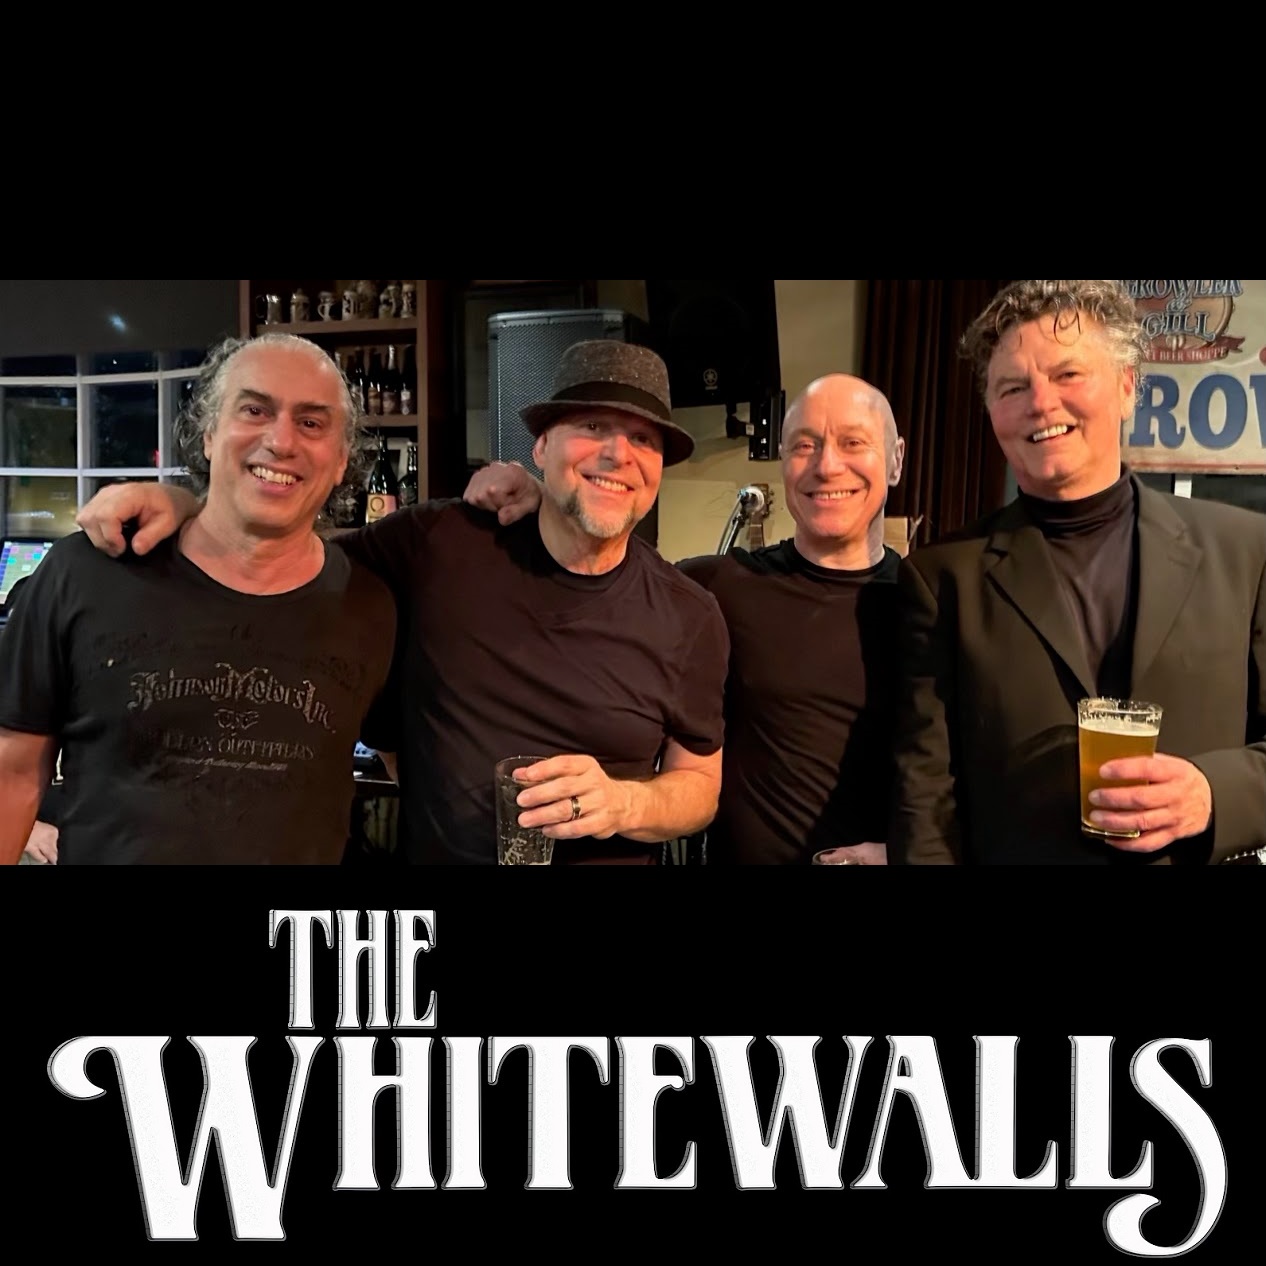 The WHITEWALLS